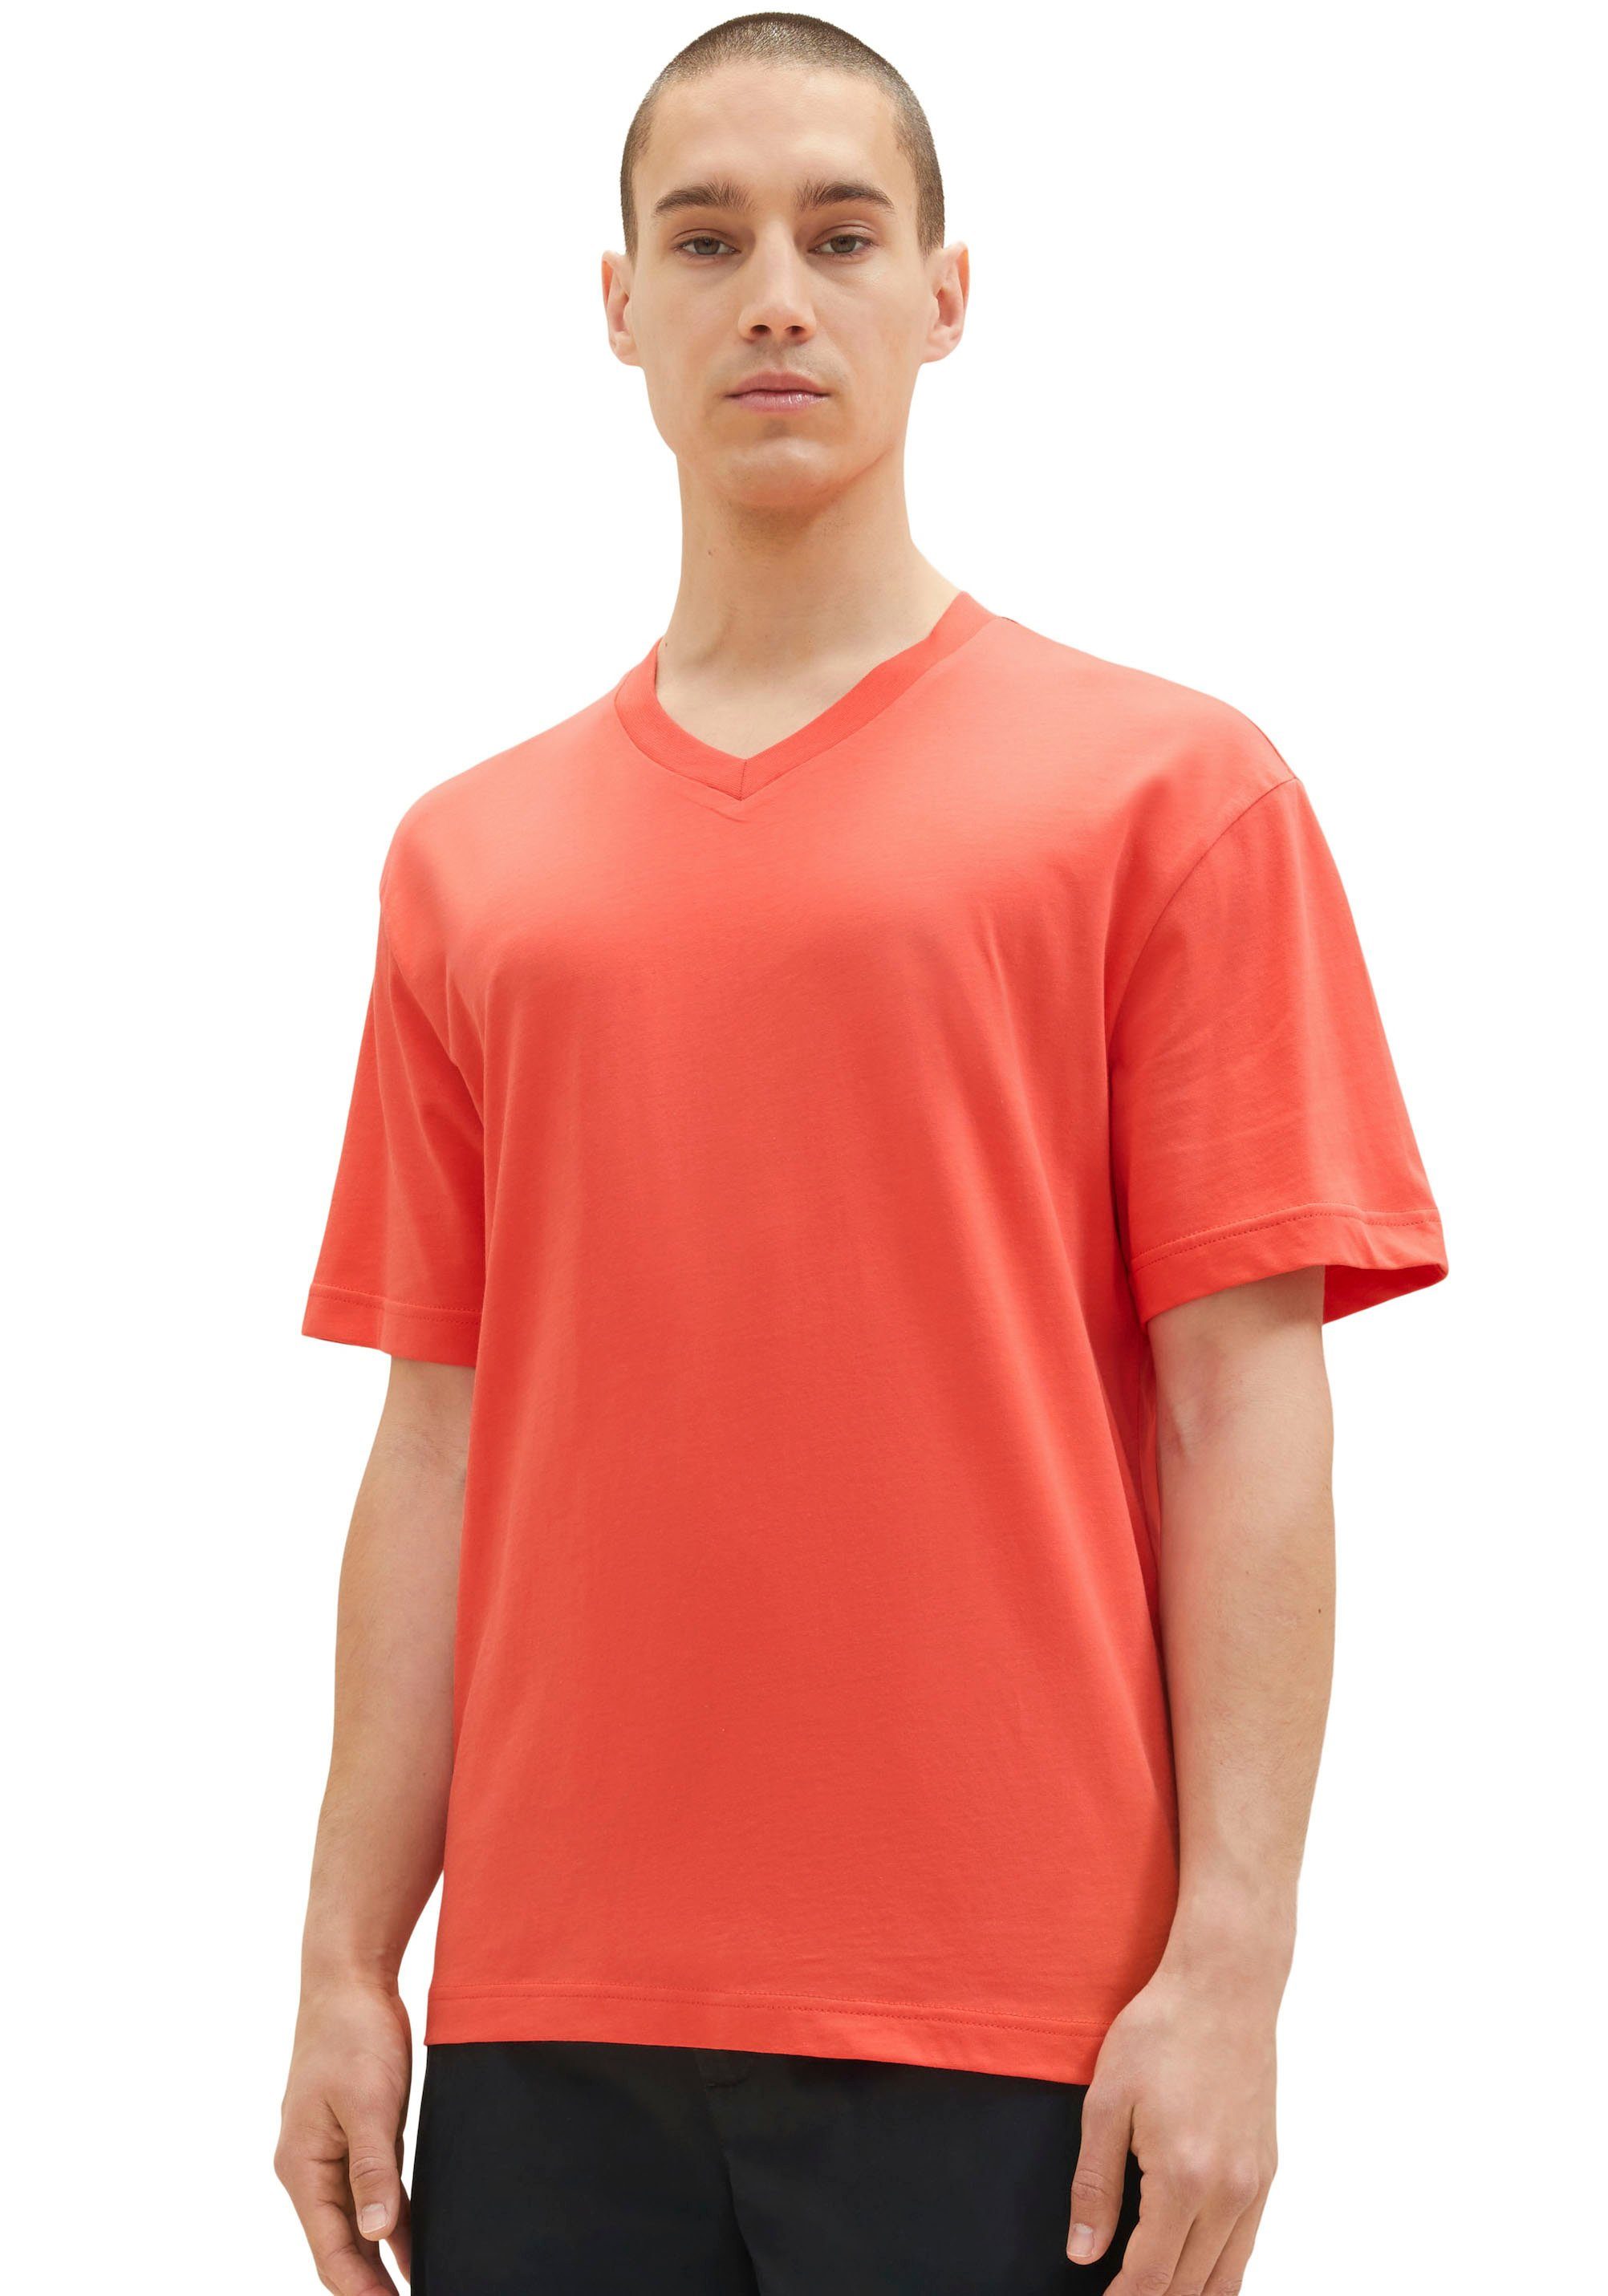 TOM TAILOR Denim T-Shirt mit abgerundetem V-Ausschnitt rot